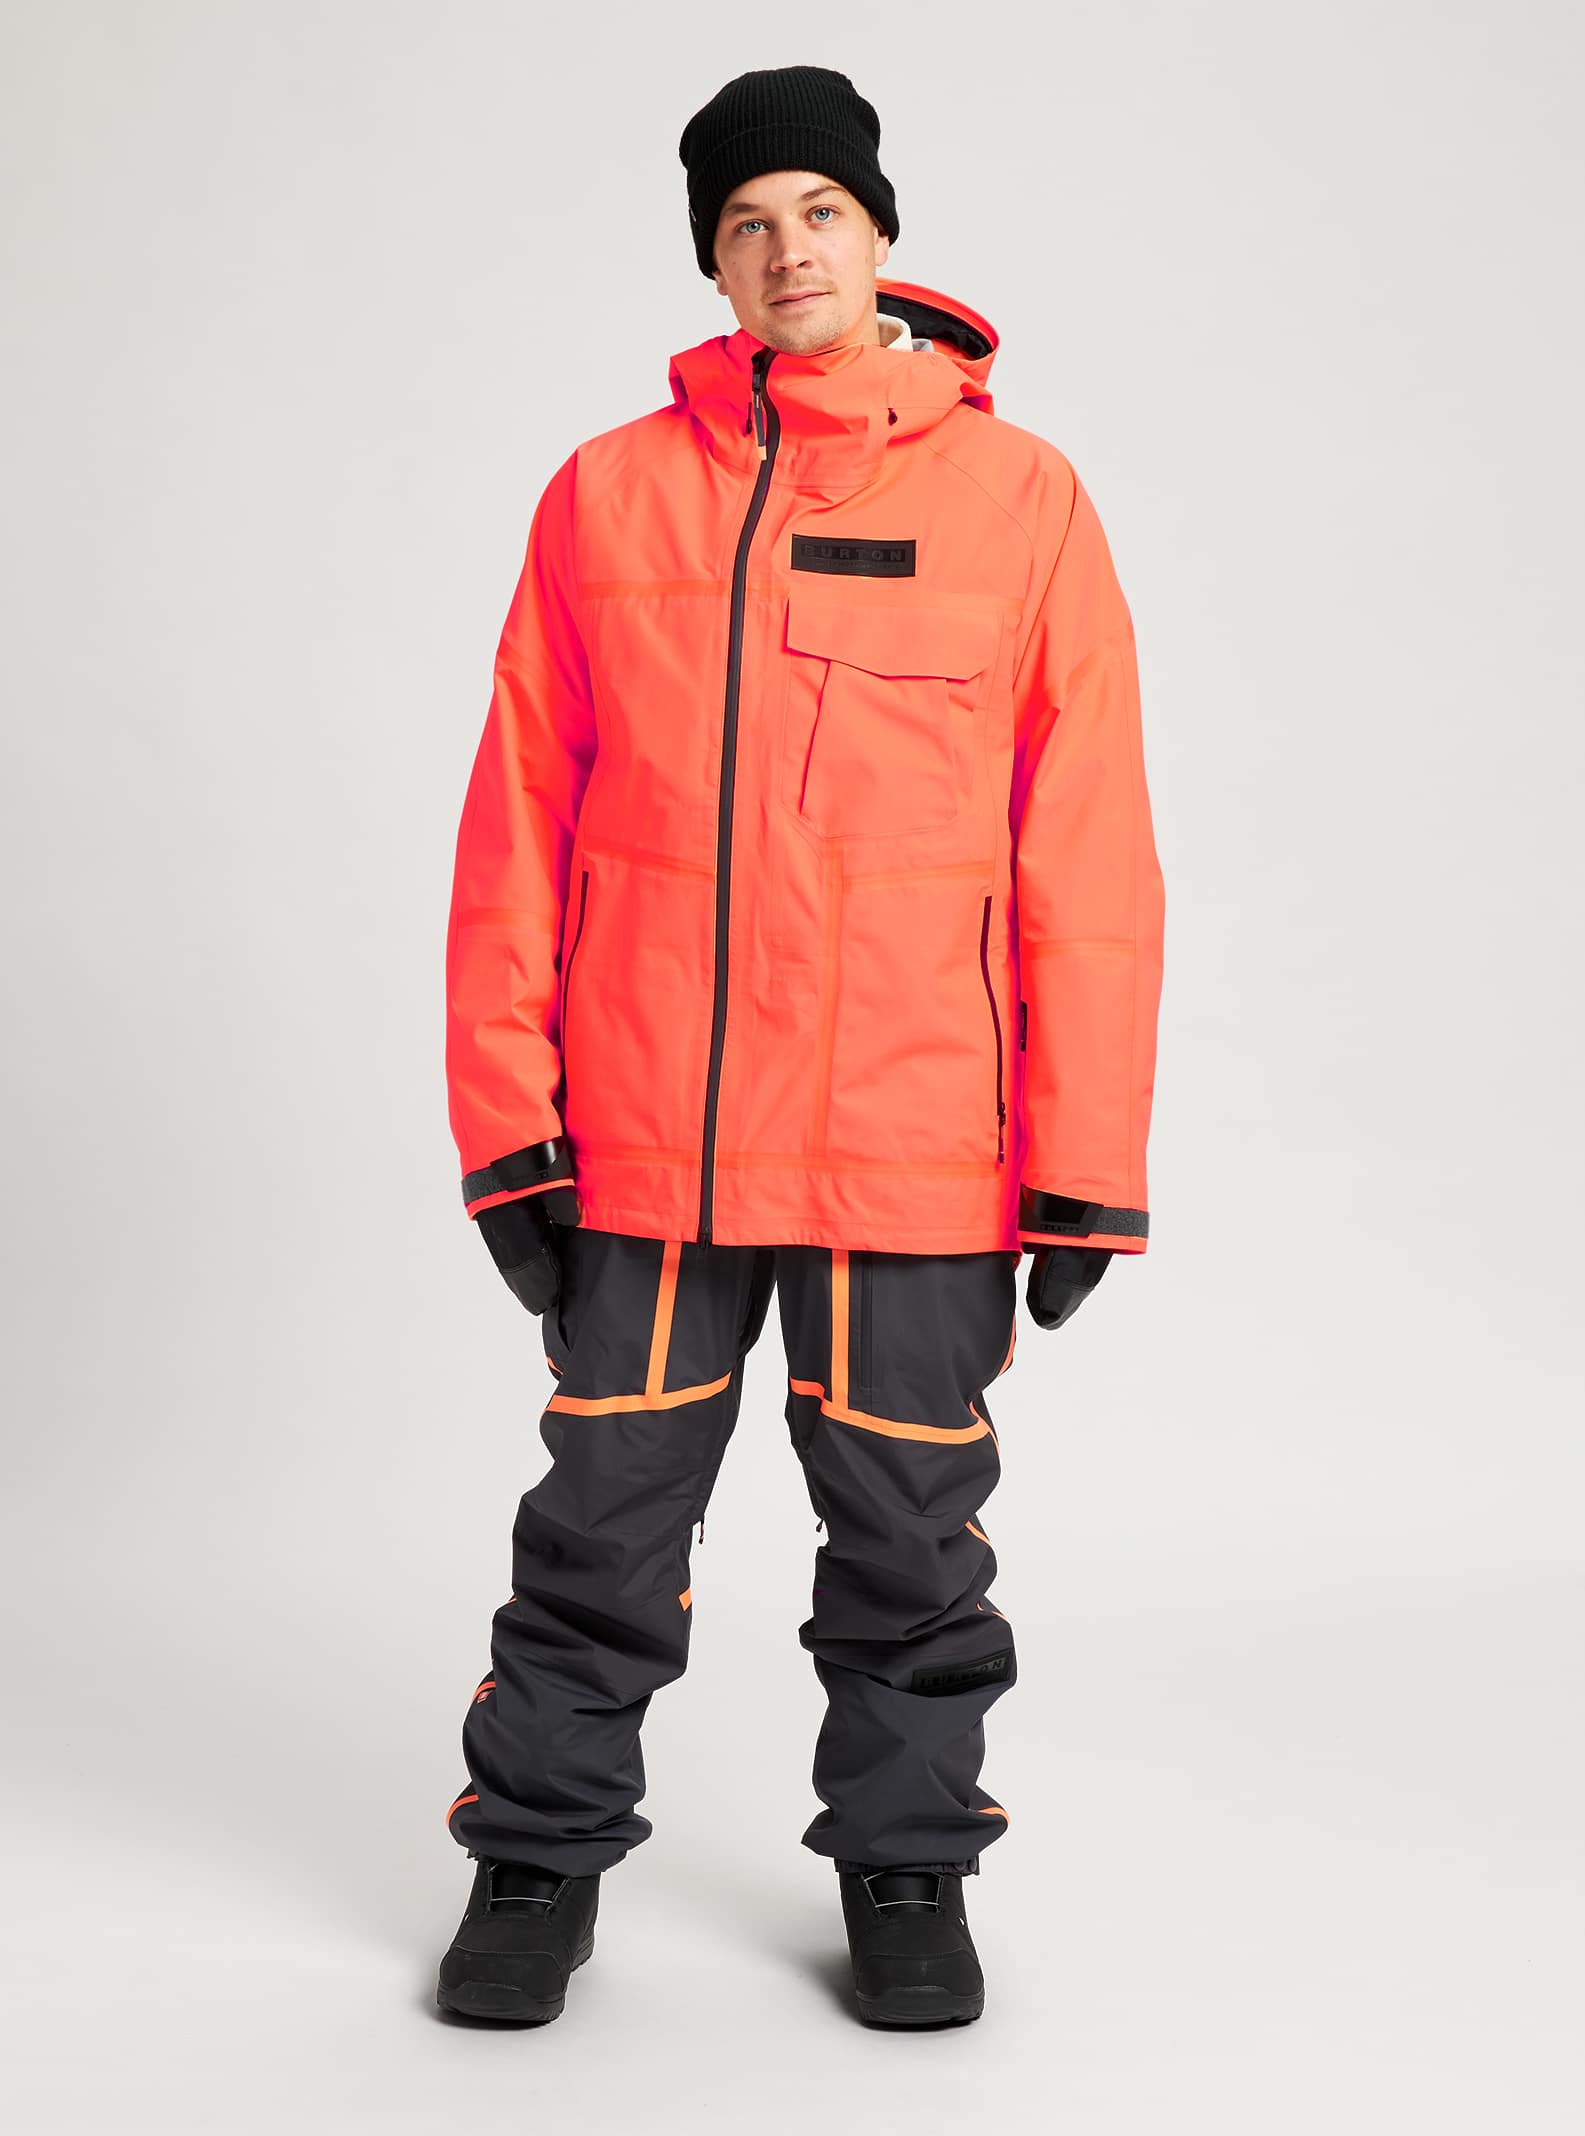 Men's Seasonal Collection | Outerwear & Clothing | Burton Snowboards US